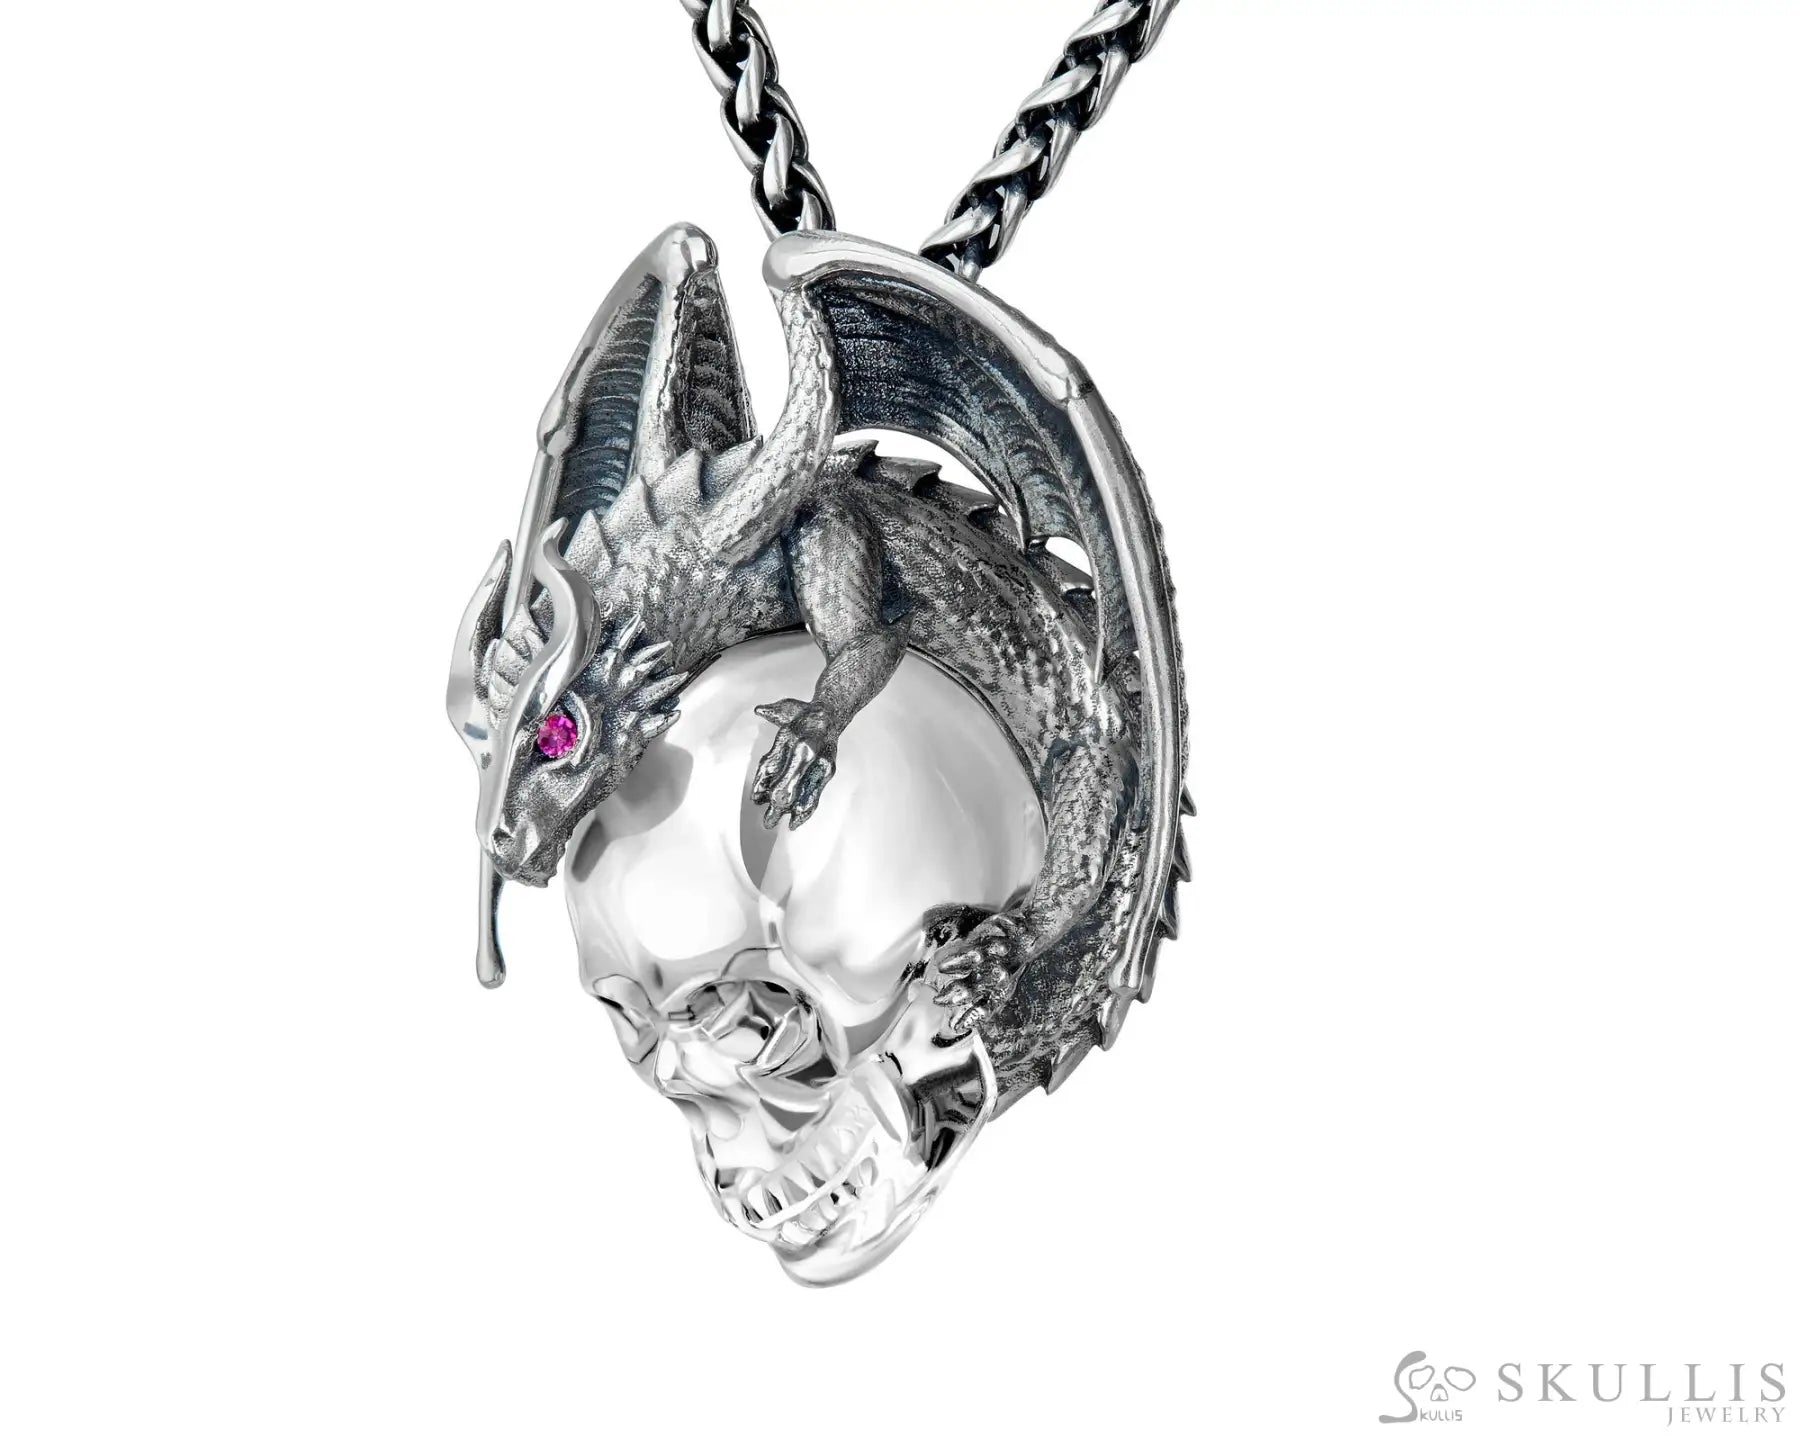 Gem Skull Pendant Necklace Of Quartz Rock Crystal Carved Skull With Dragon In Blackened